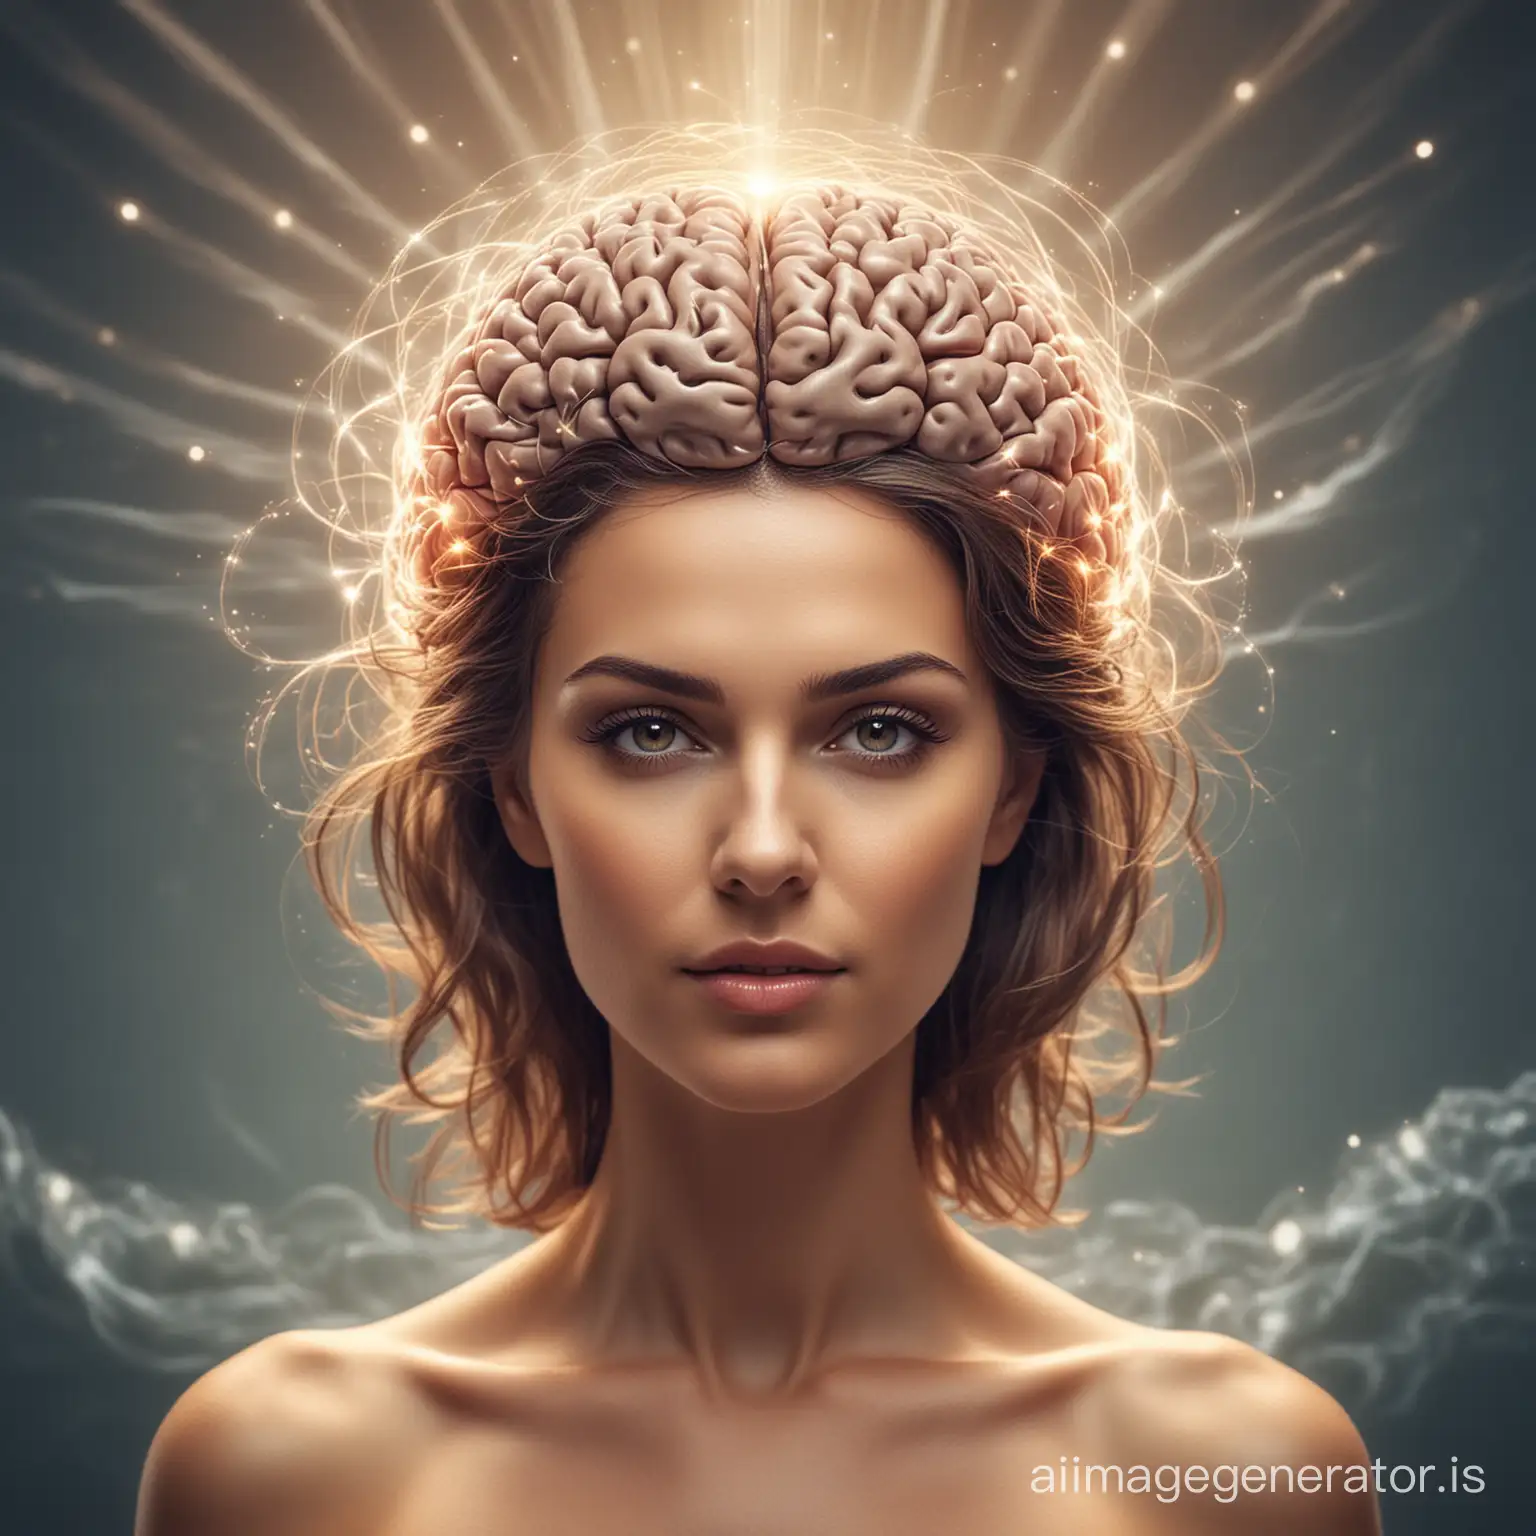 Creative-Female-Brain-Illuminated-by-Waves-of-Light